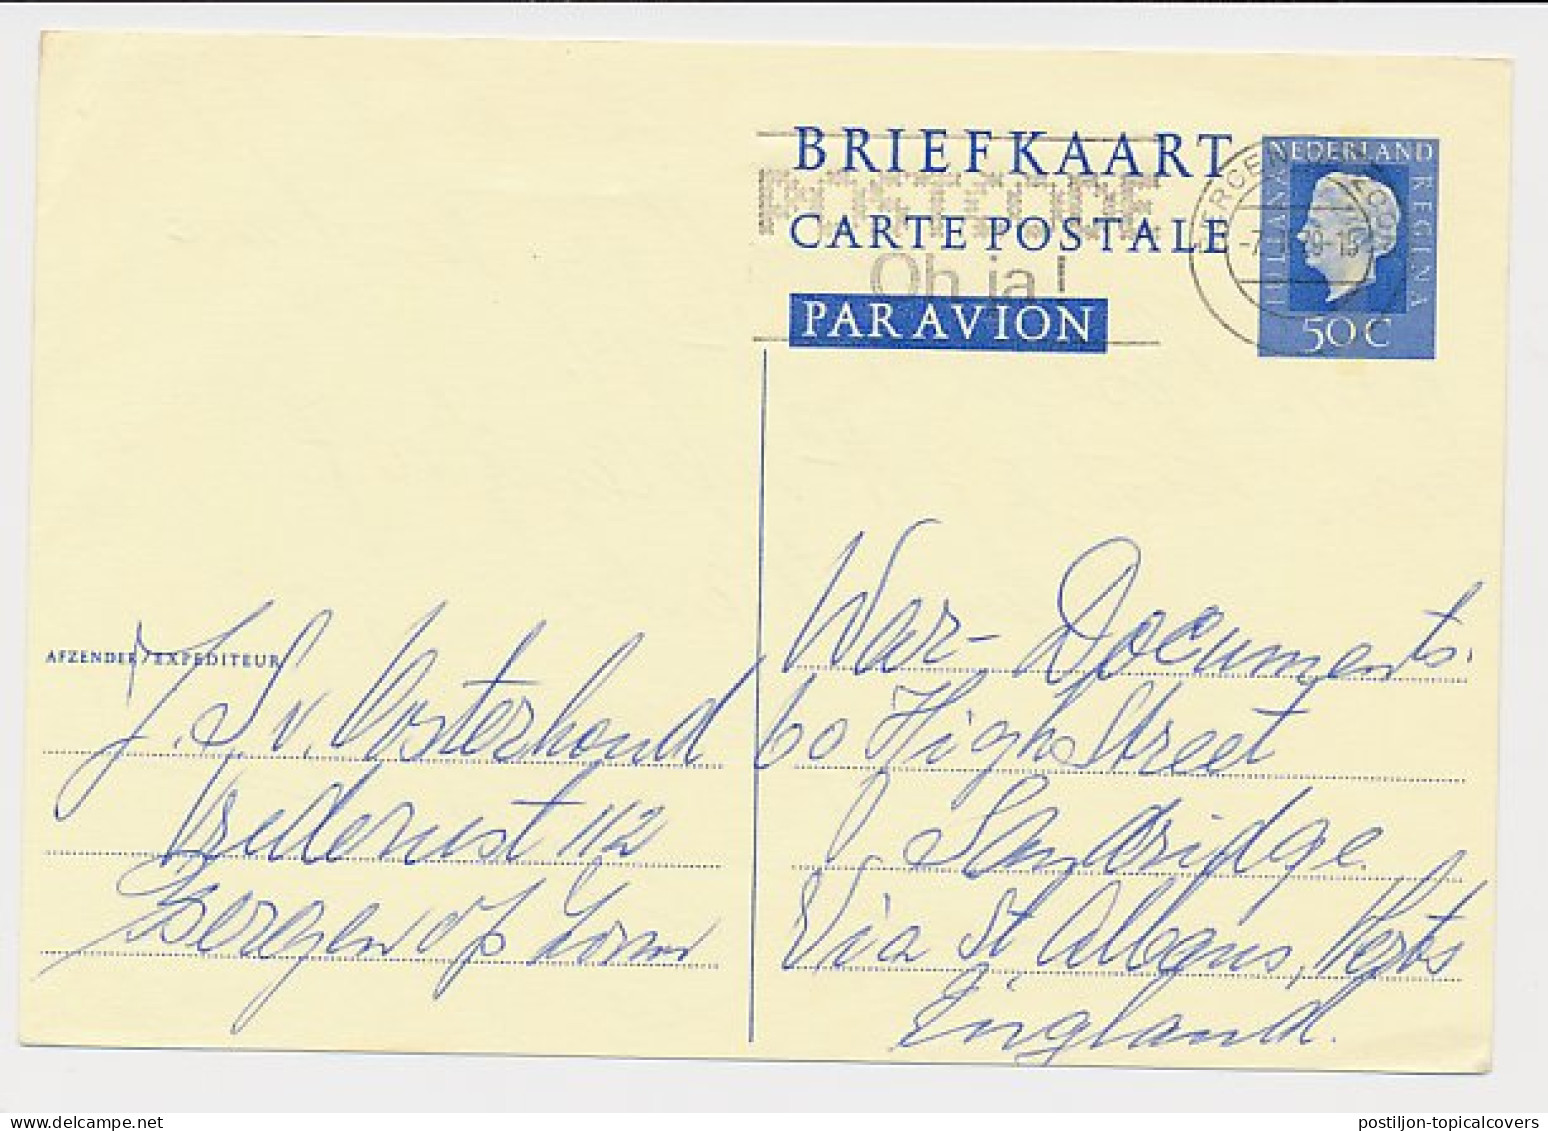 Briefkaart G. 354 Bergen Op Zoom - Sandridge GB / UK 1979 - Interi Postali